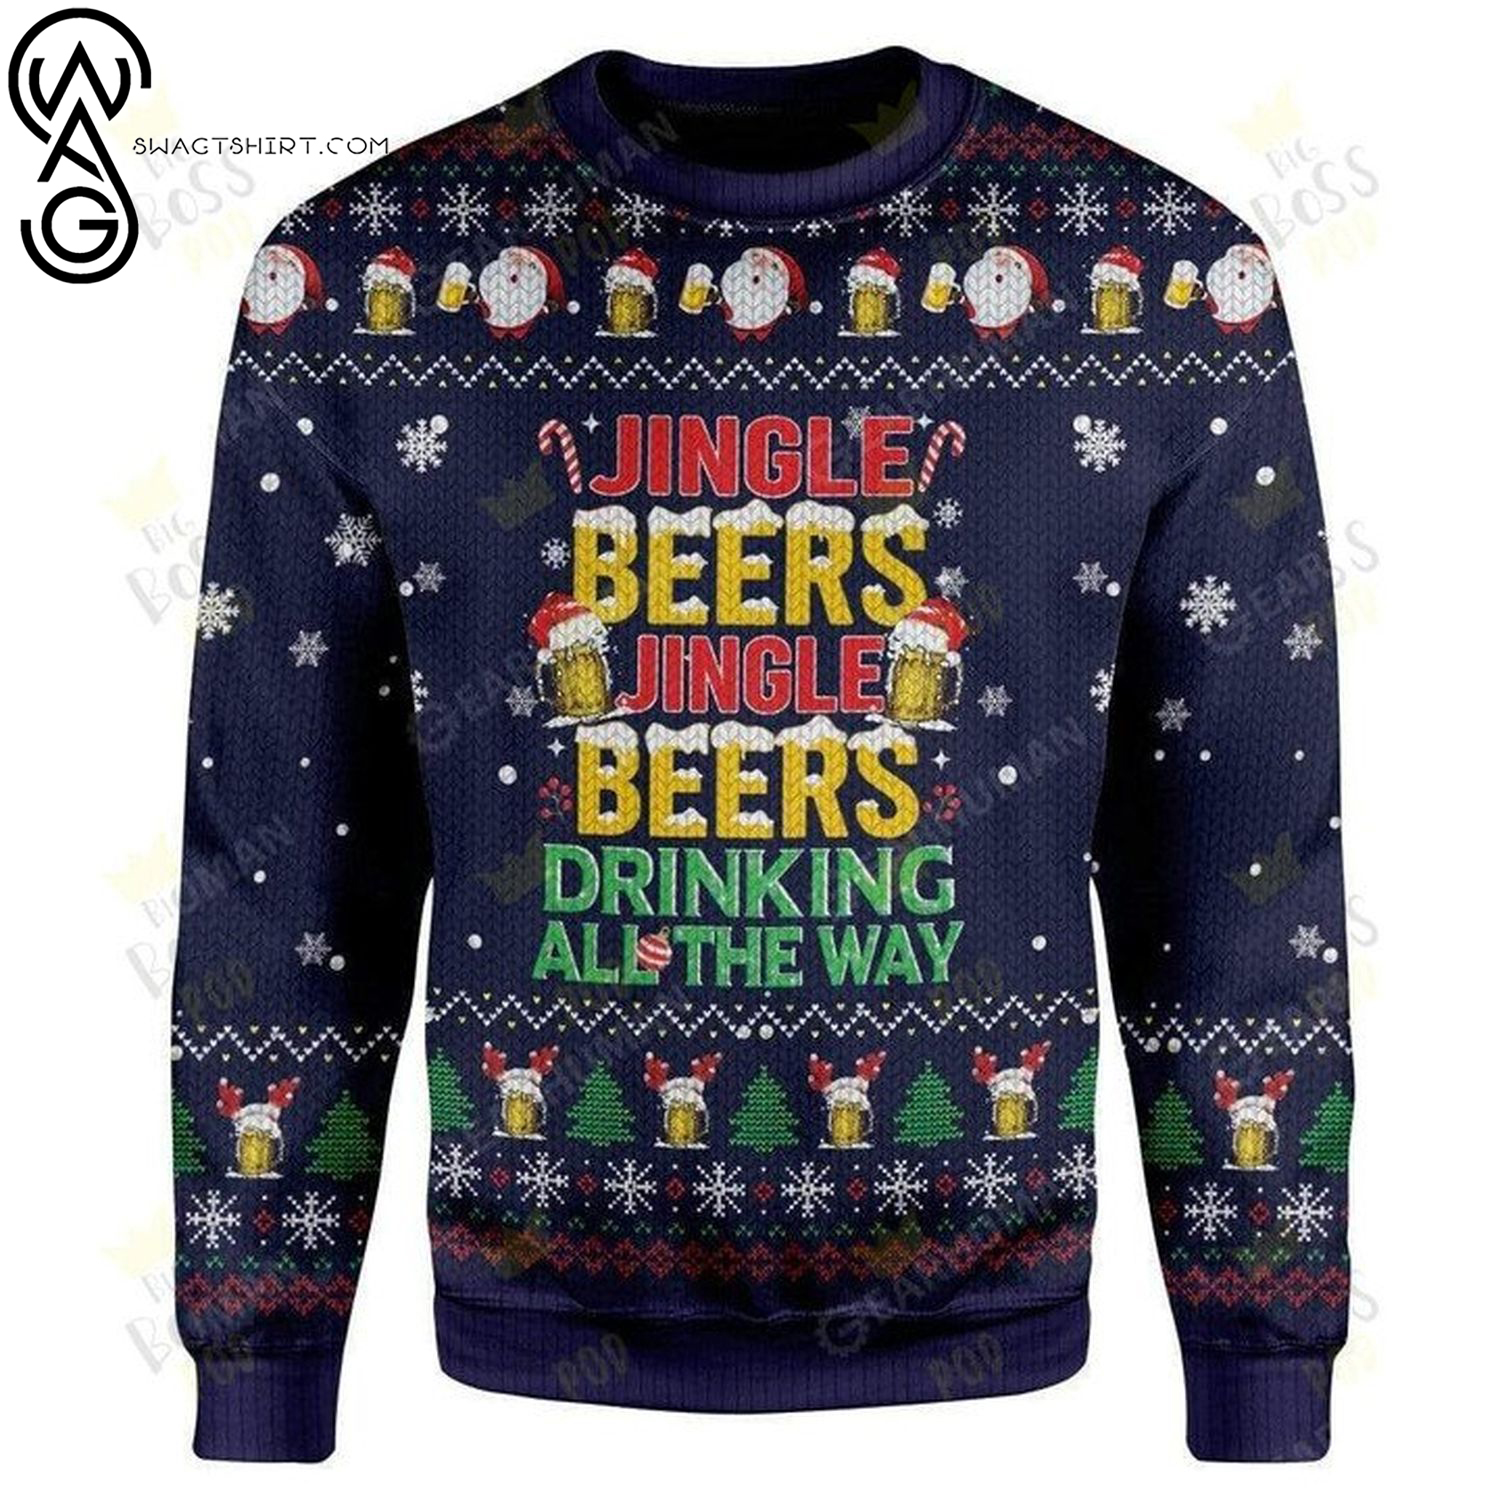 Jingle beers jingle beers drink it all the way ugly christmas sweater